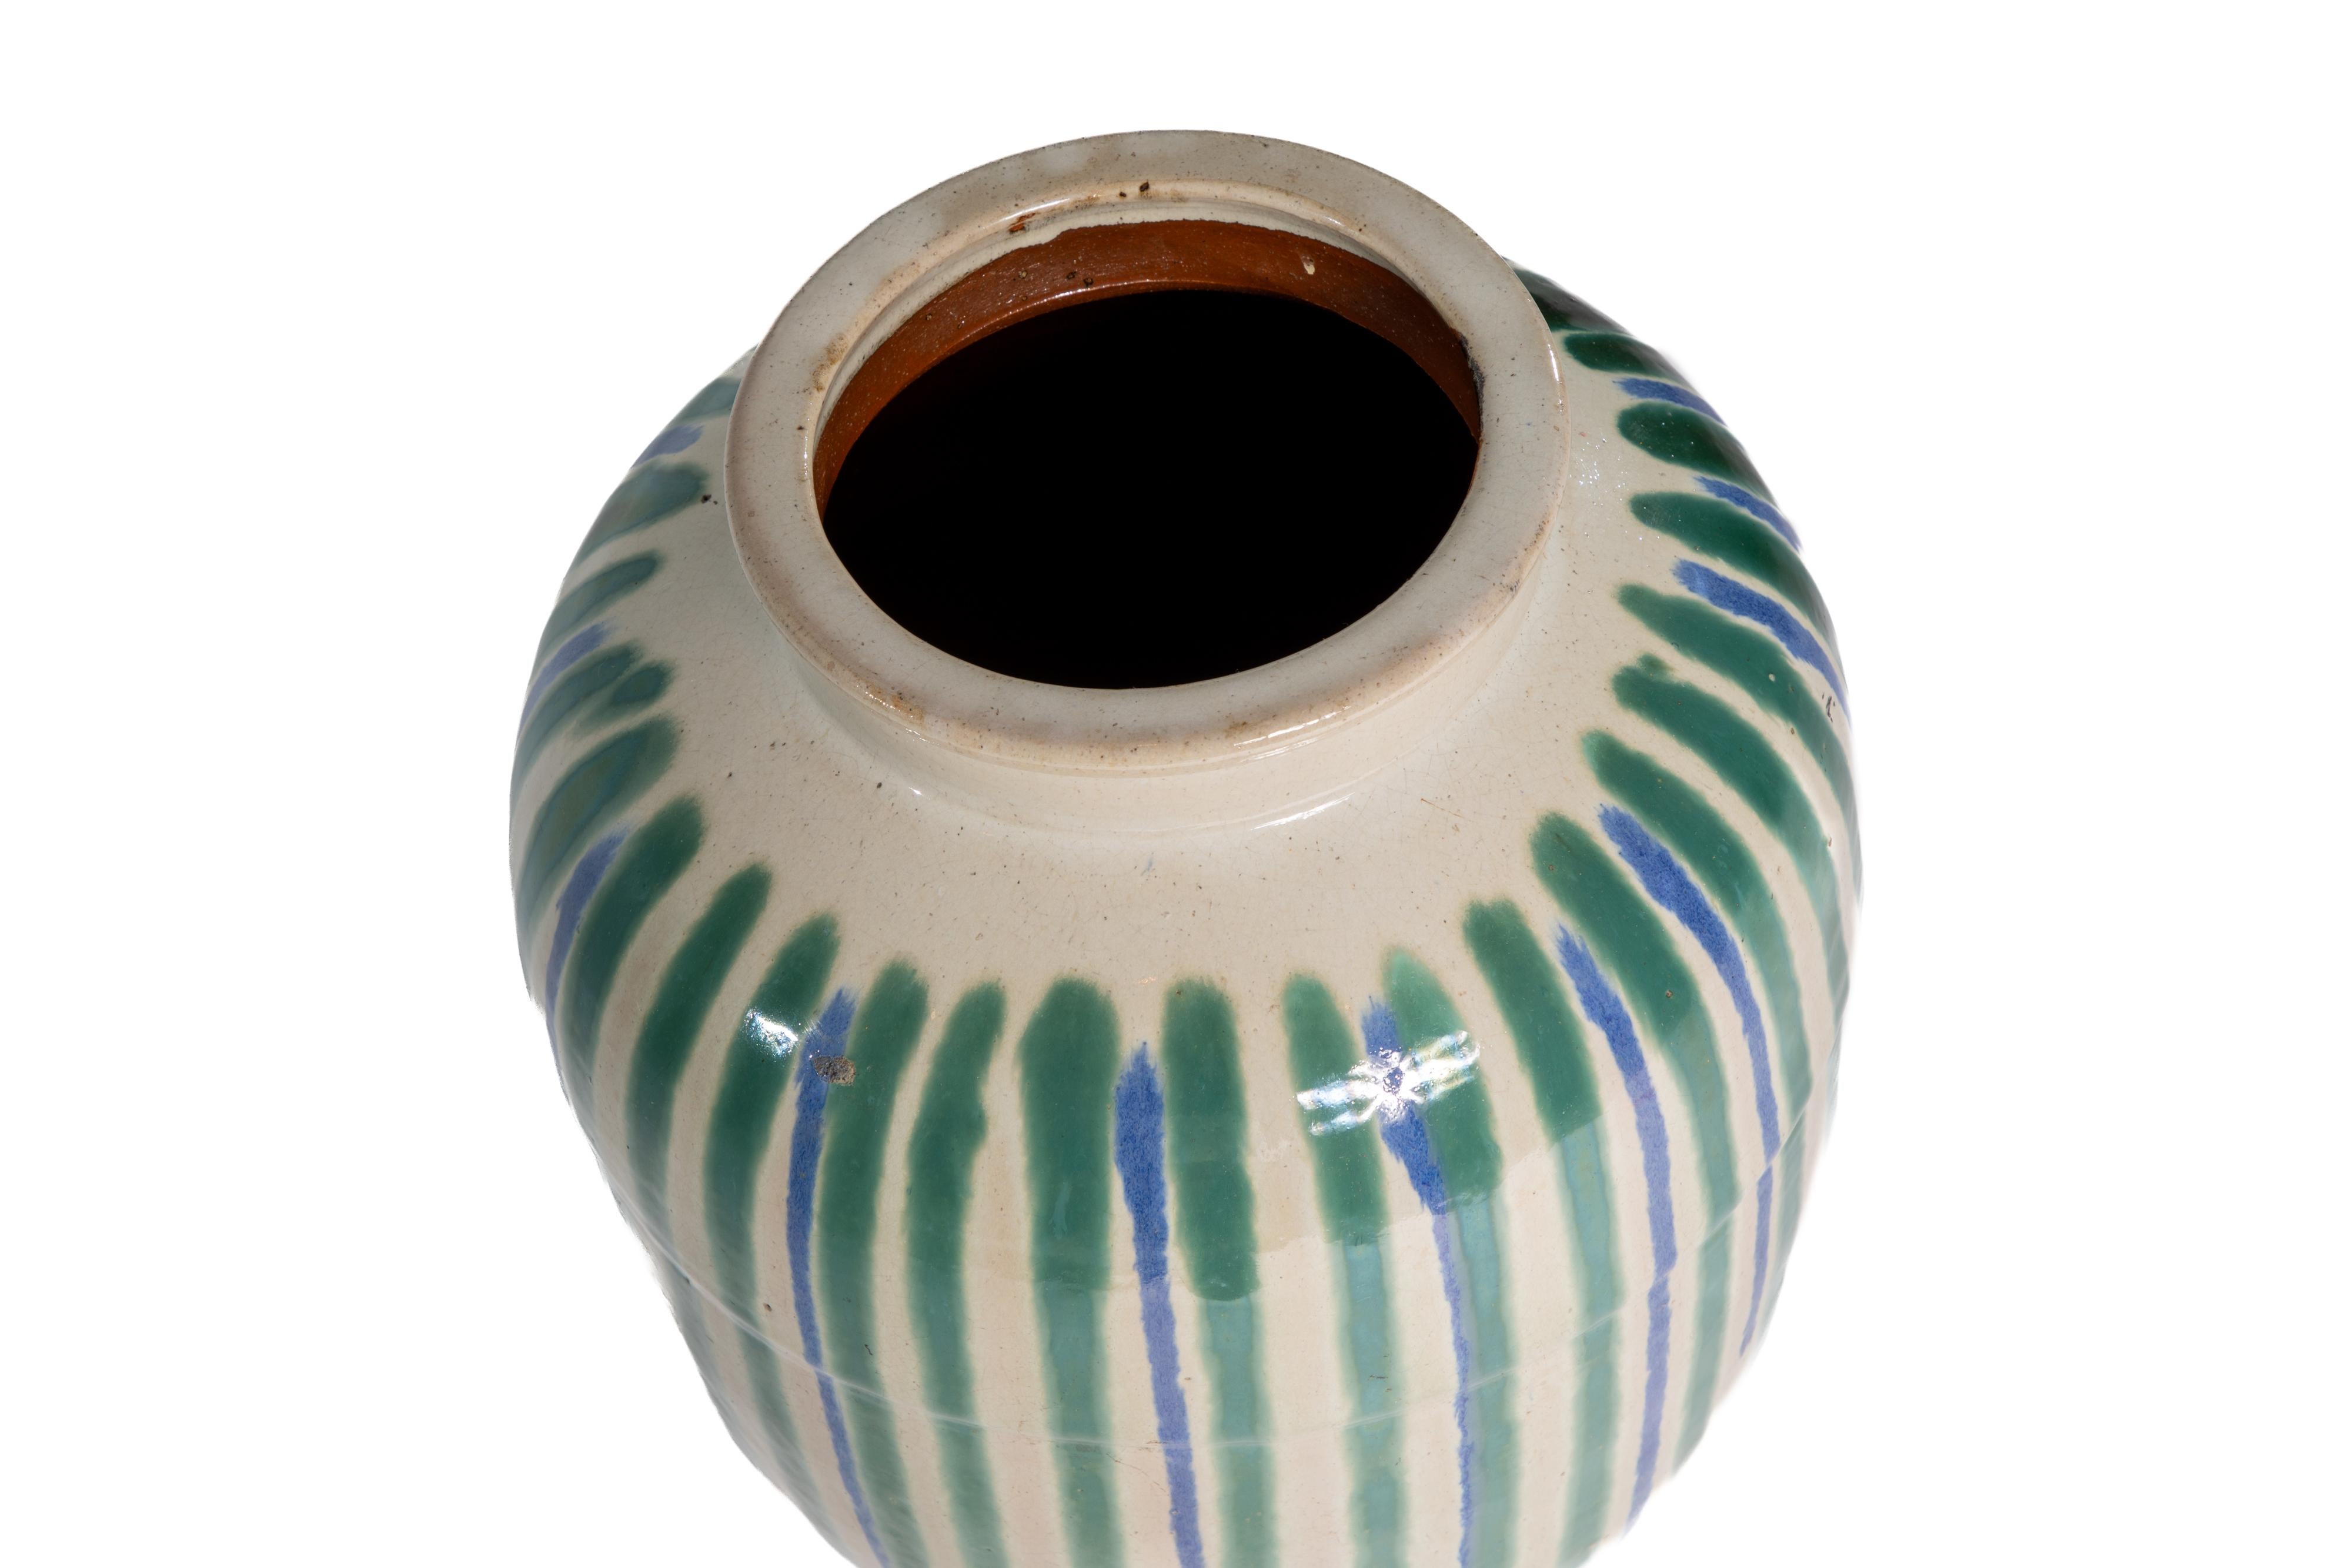 Large glazed stoneware vase of Japanese origin.  Cream base with blue and green decoration.
Marked on underside with script.